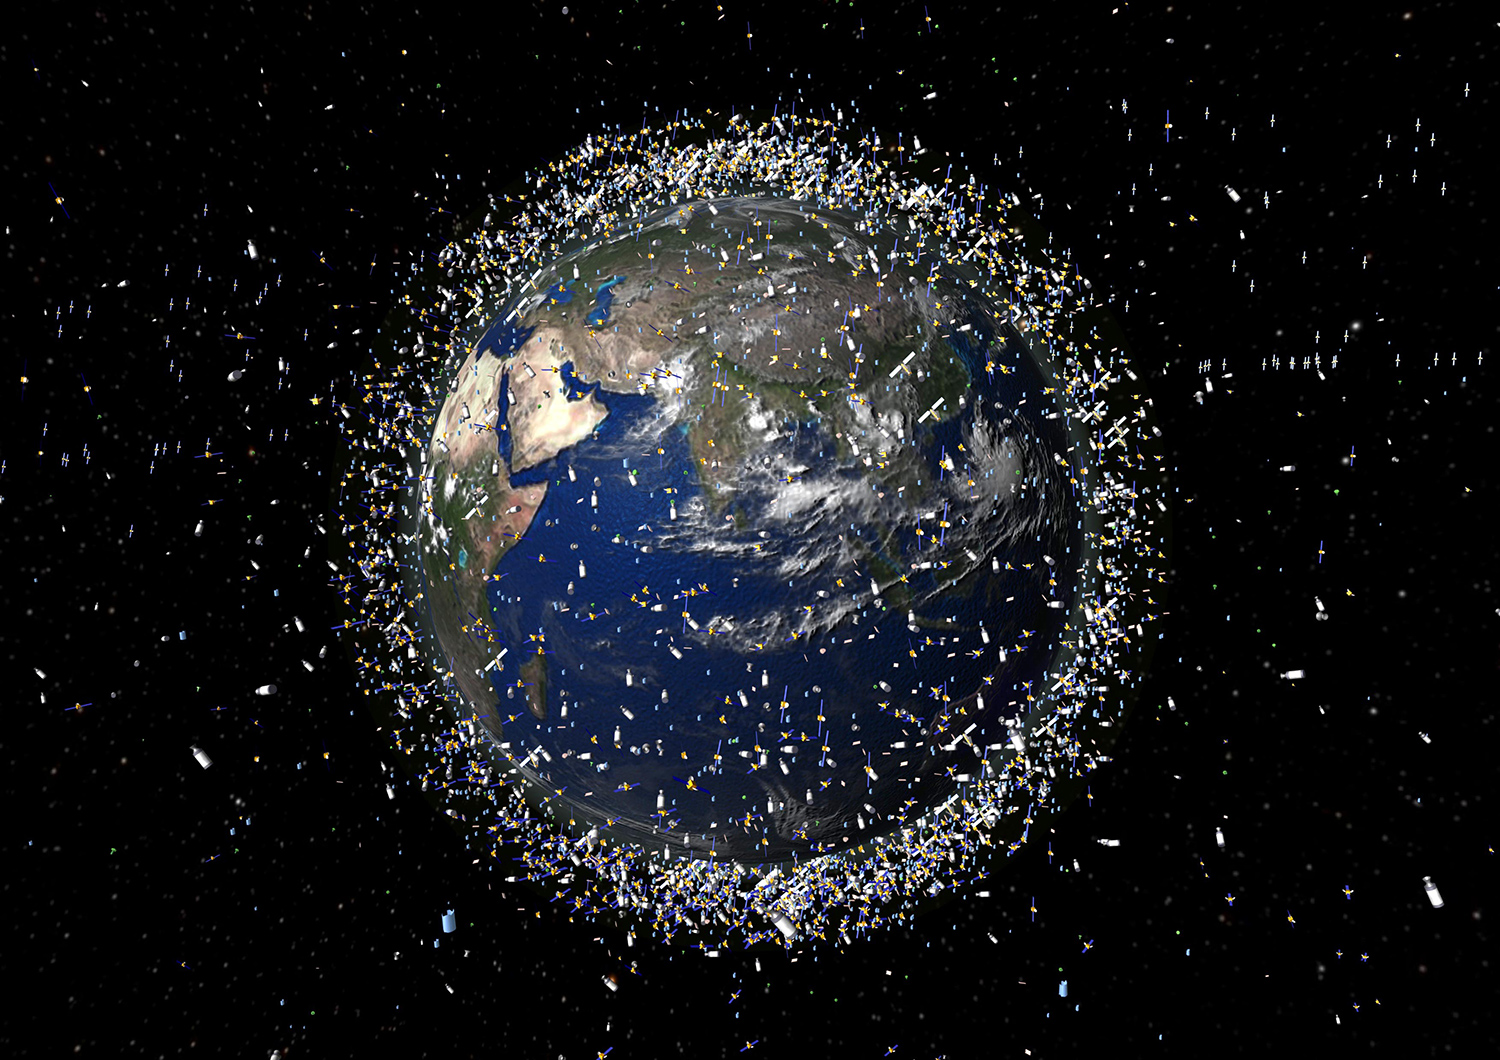 space debris around Earth